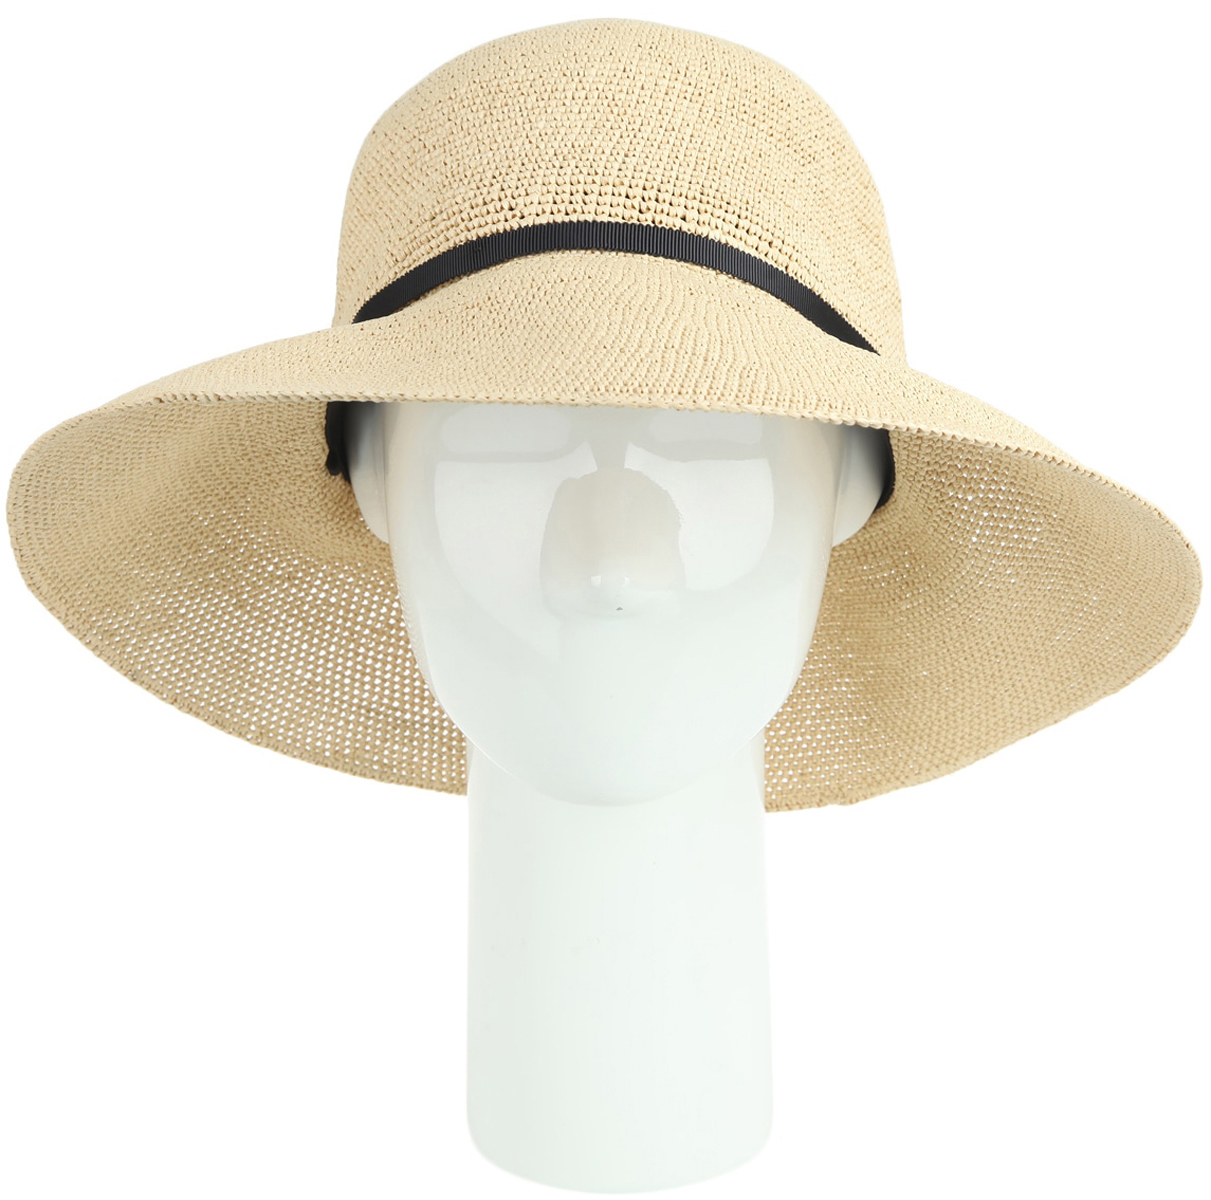 Шляпа женская Moltini, цвет: бежевый. 170611-240T. Размер 57/58